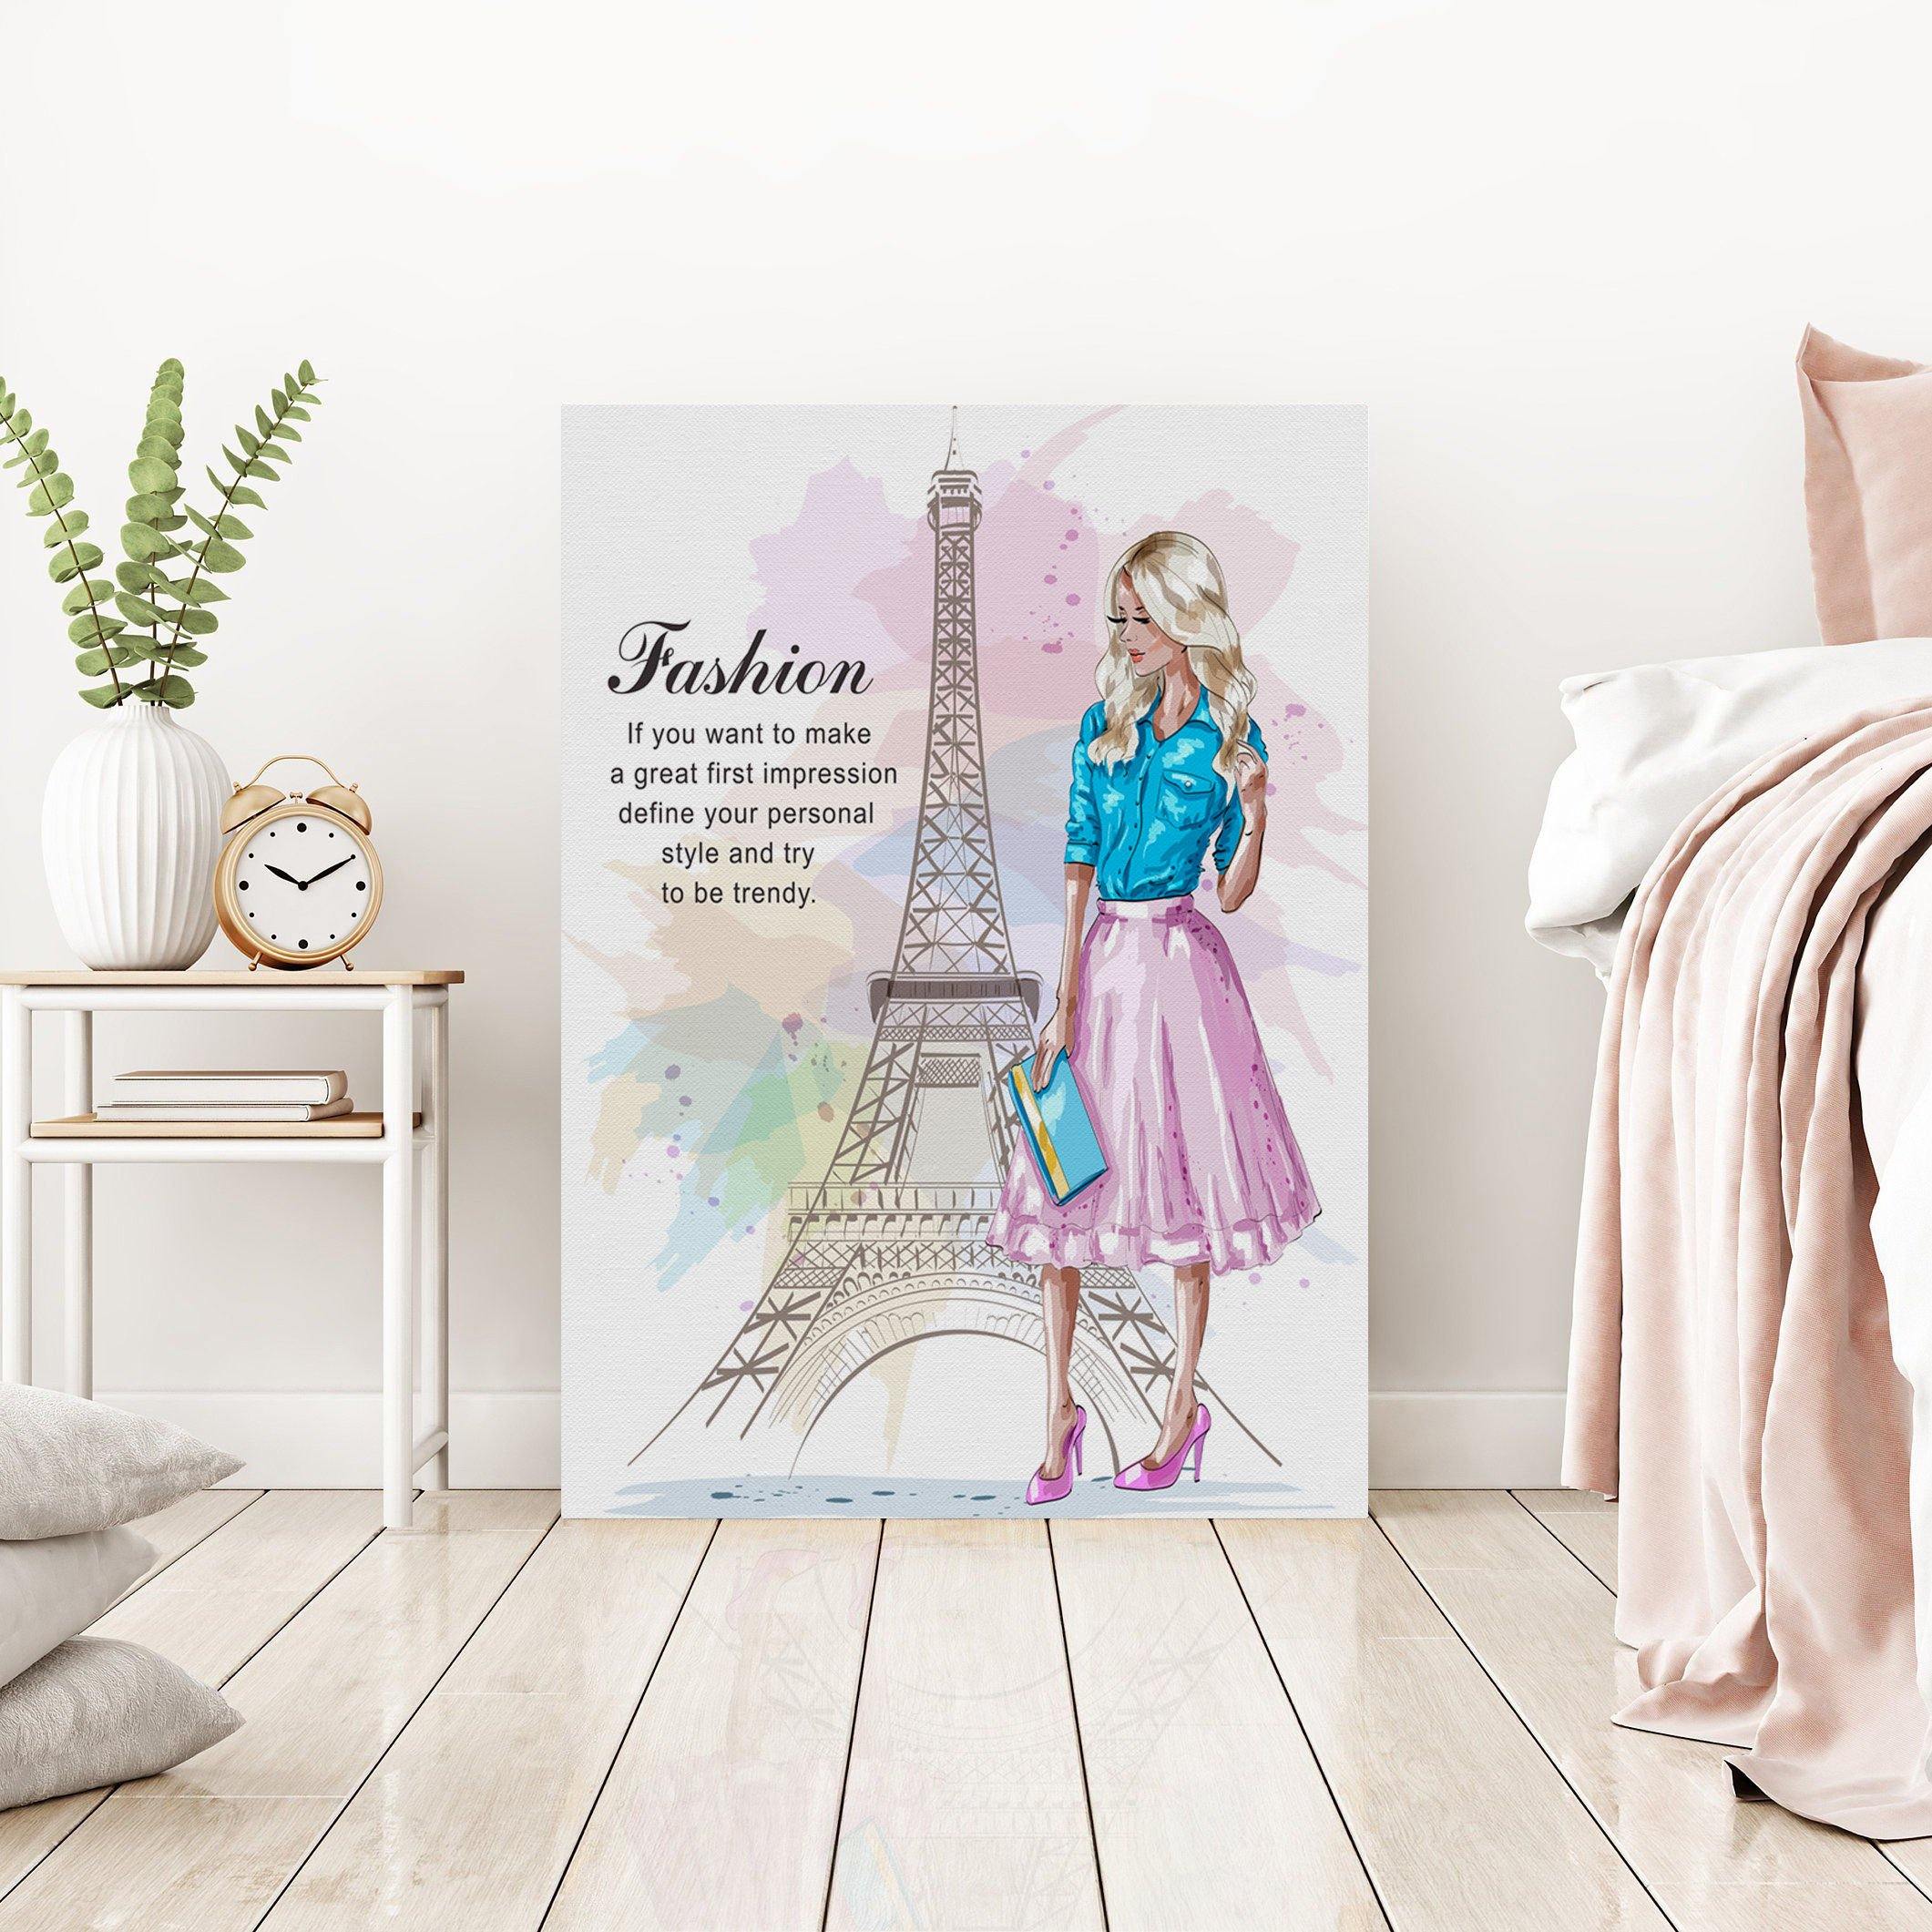 Paris Fashion Canvas Wall Art - SharpWallArts